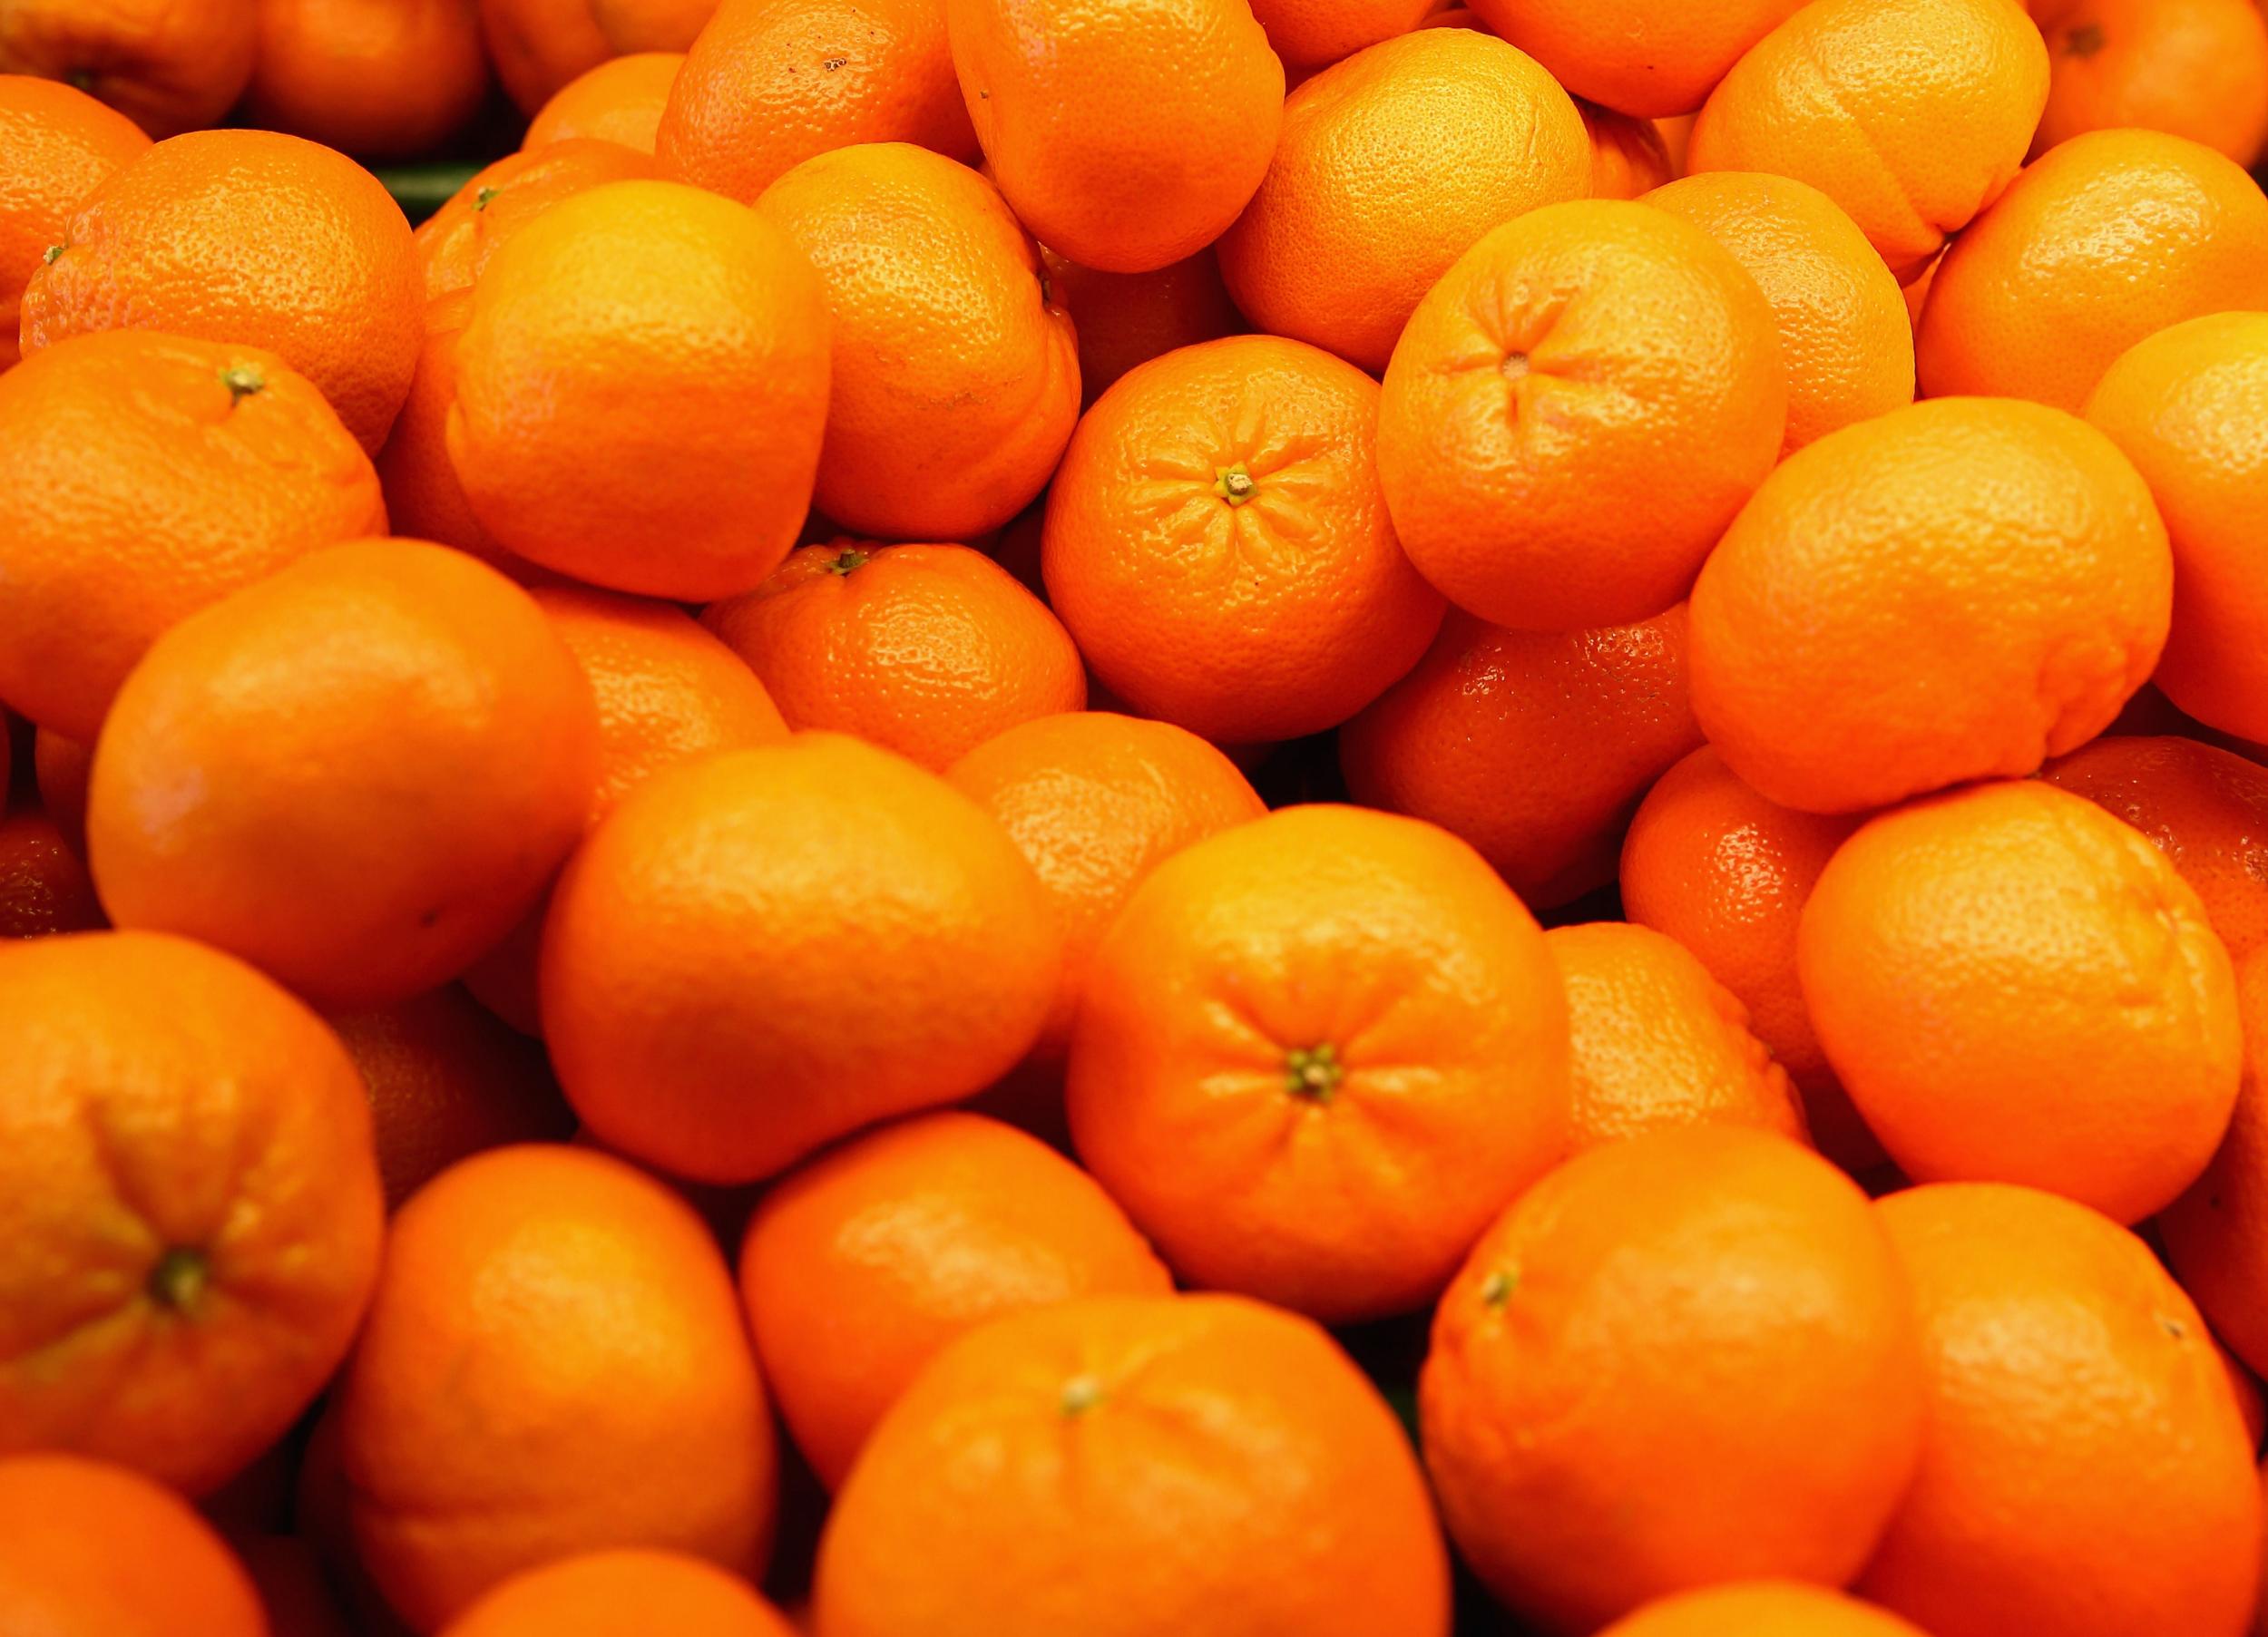 Could oranges help prevent mercury pollution?